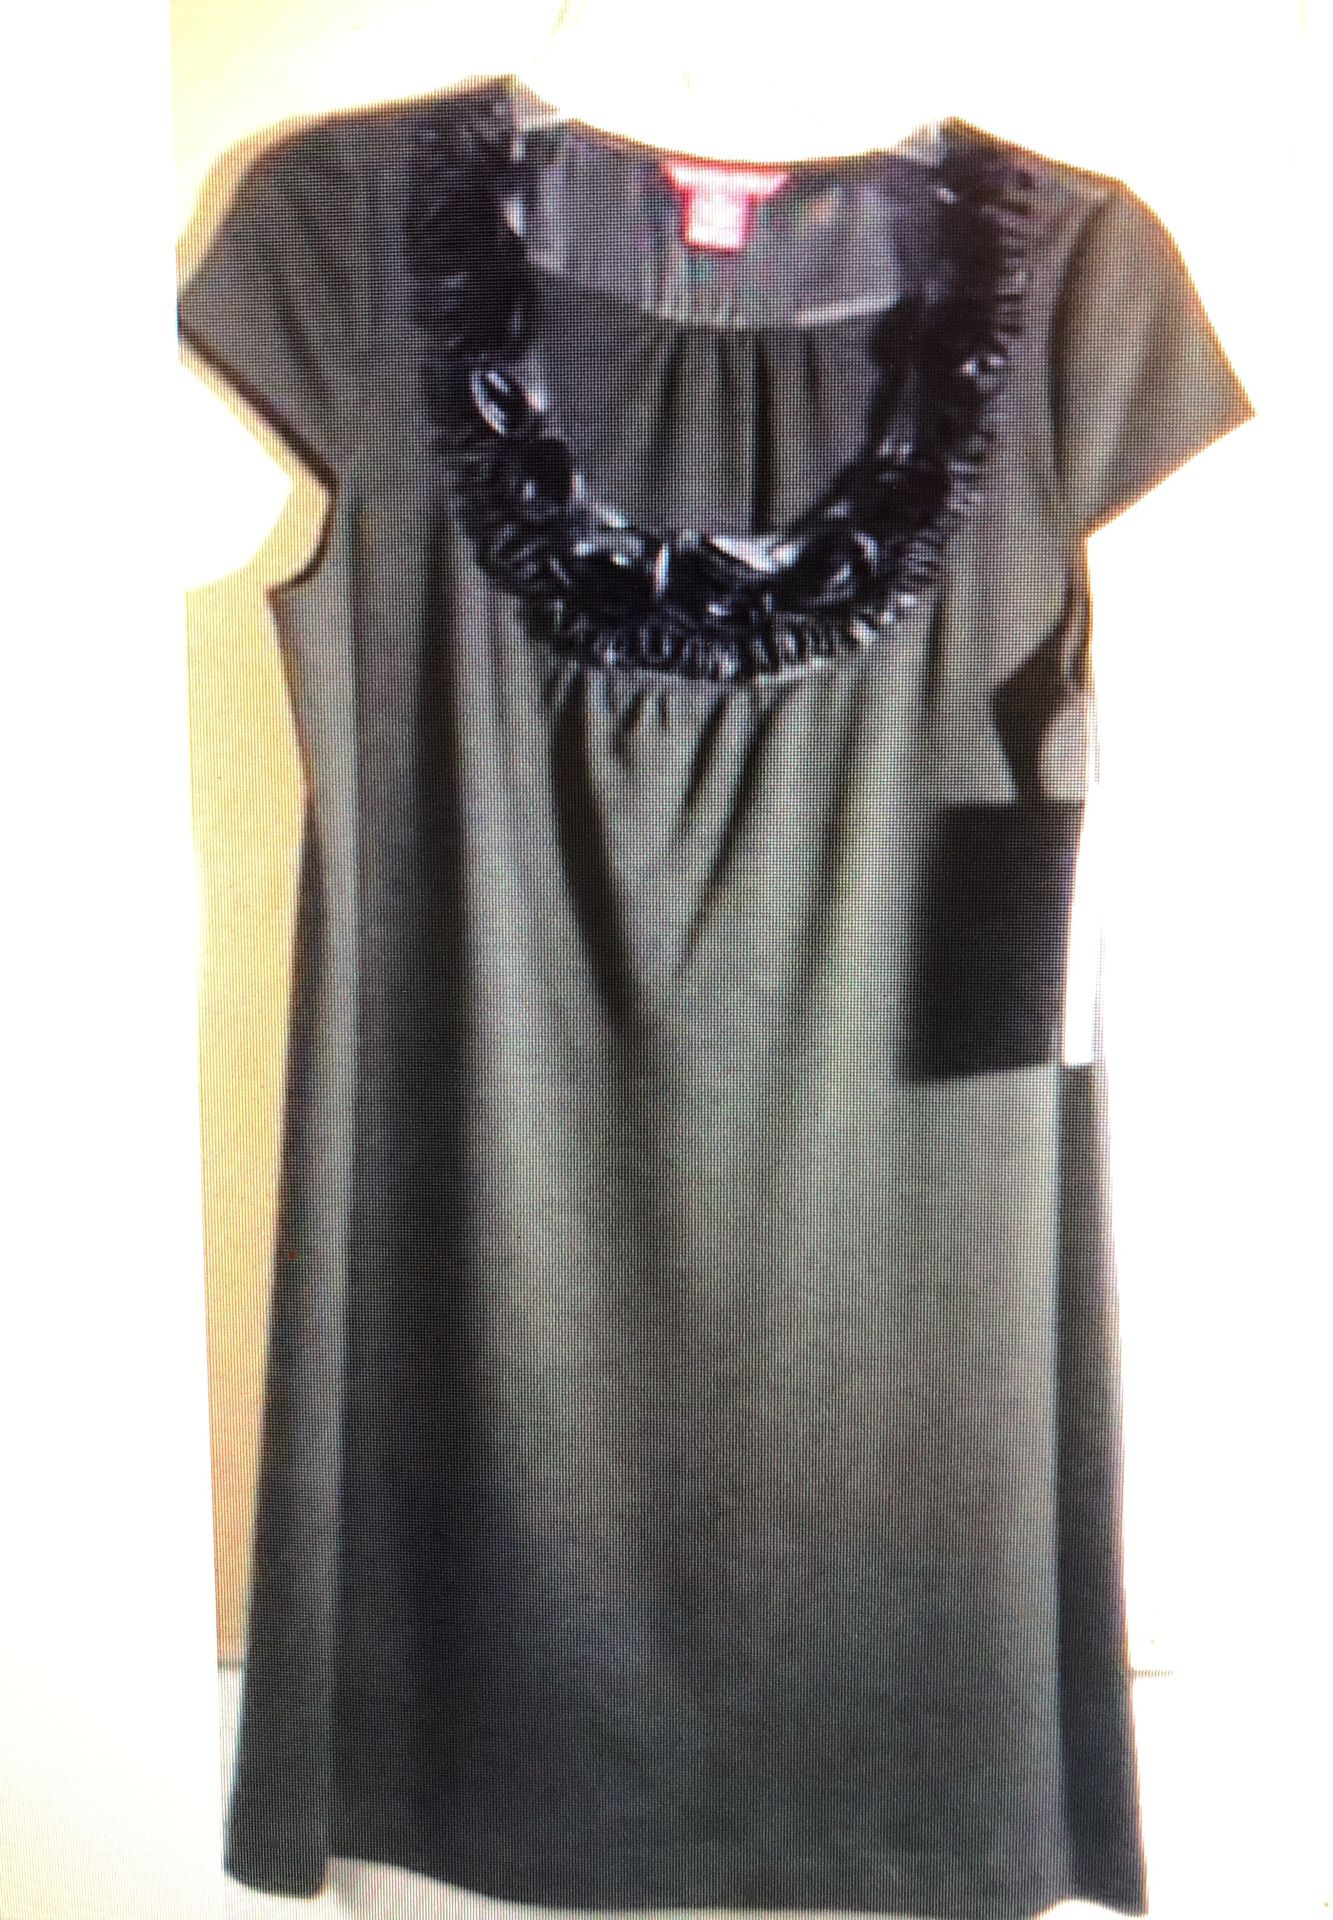 “Little Black Dress” Sunny Leigh Size 10P - NWT